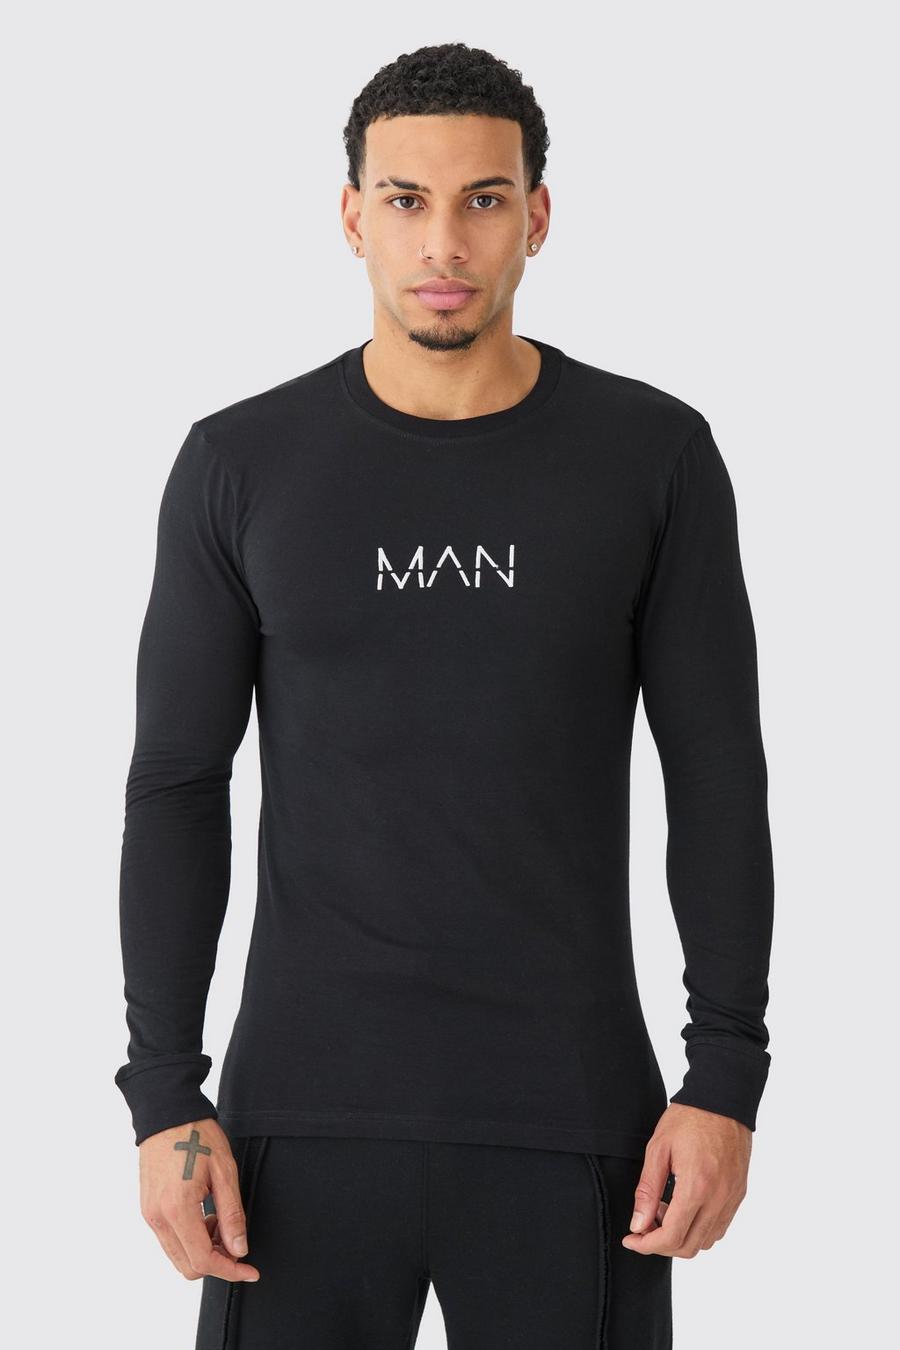 Camiseta MAN de manga larga ajustada al músculo, Black